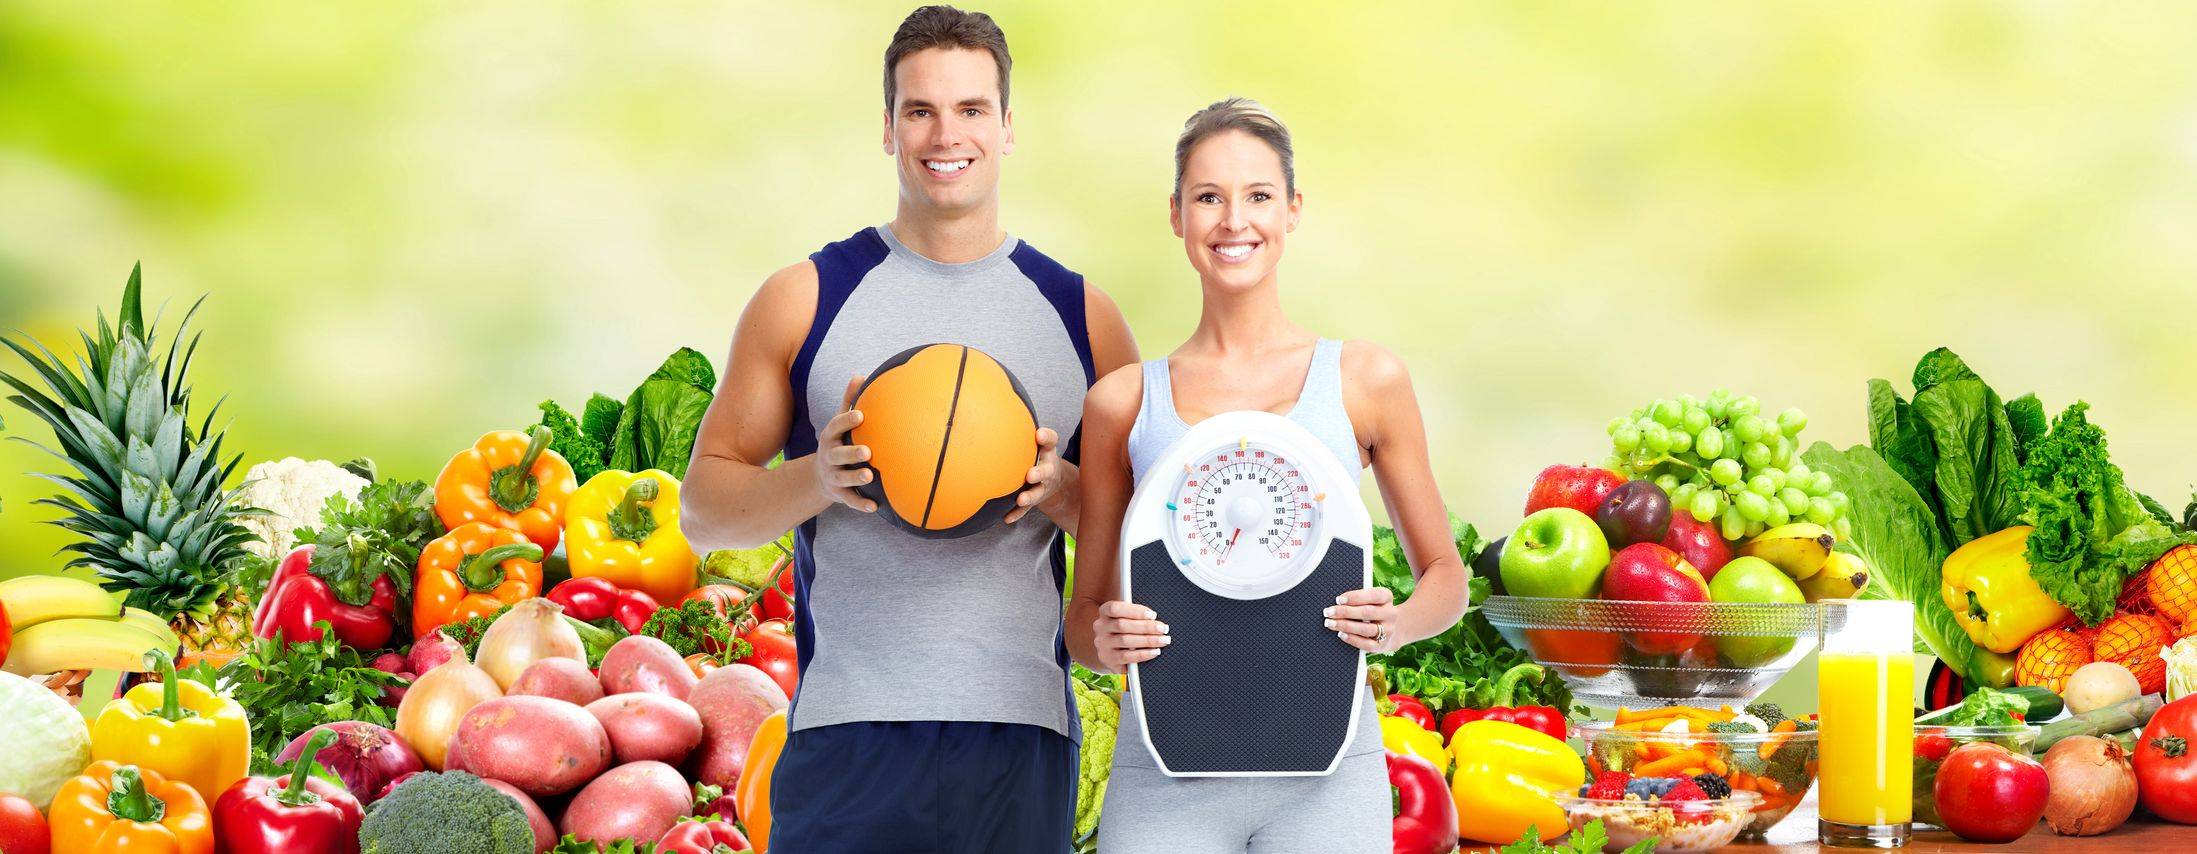 Blog nutricion deportiva